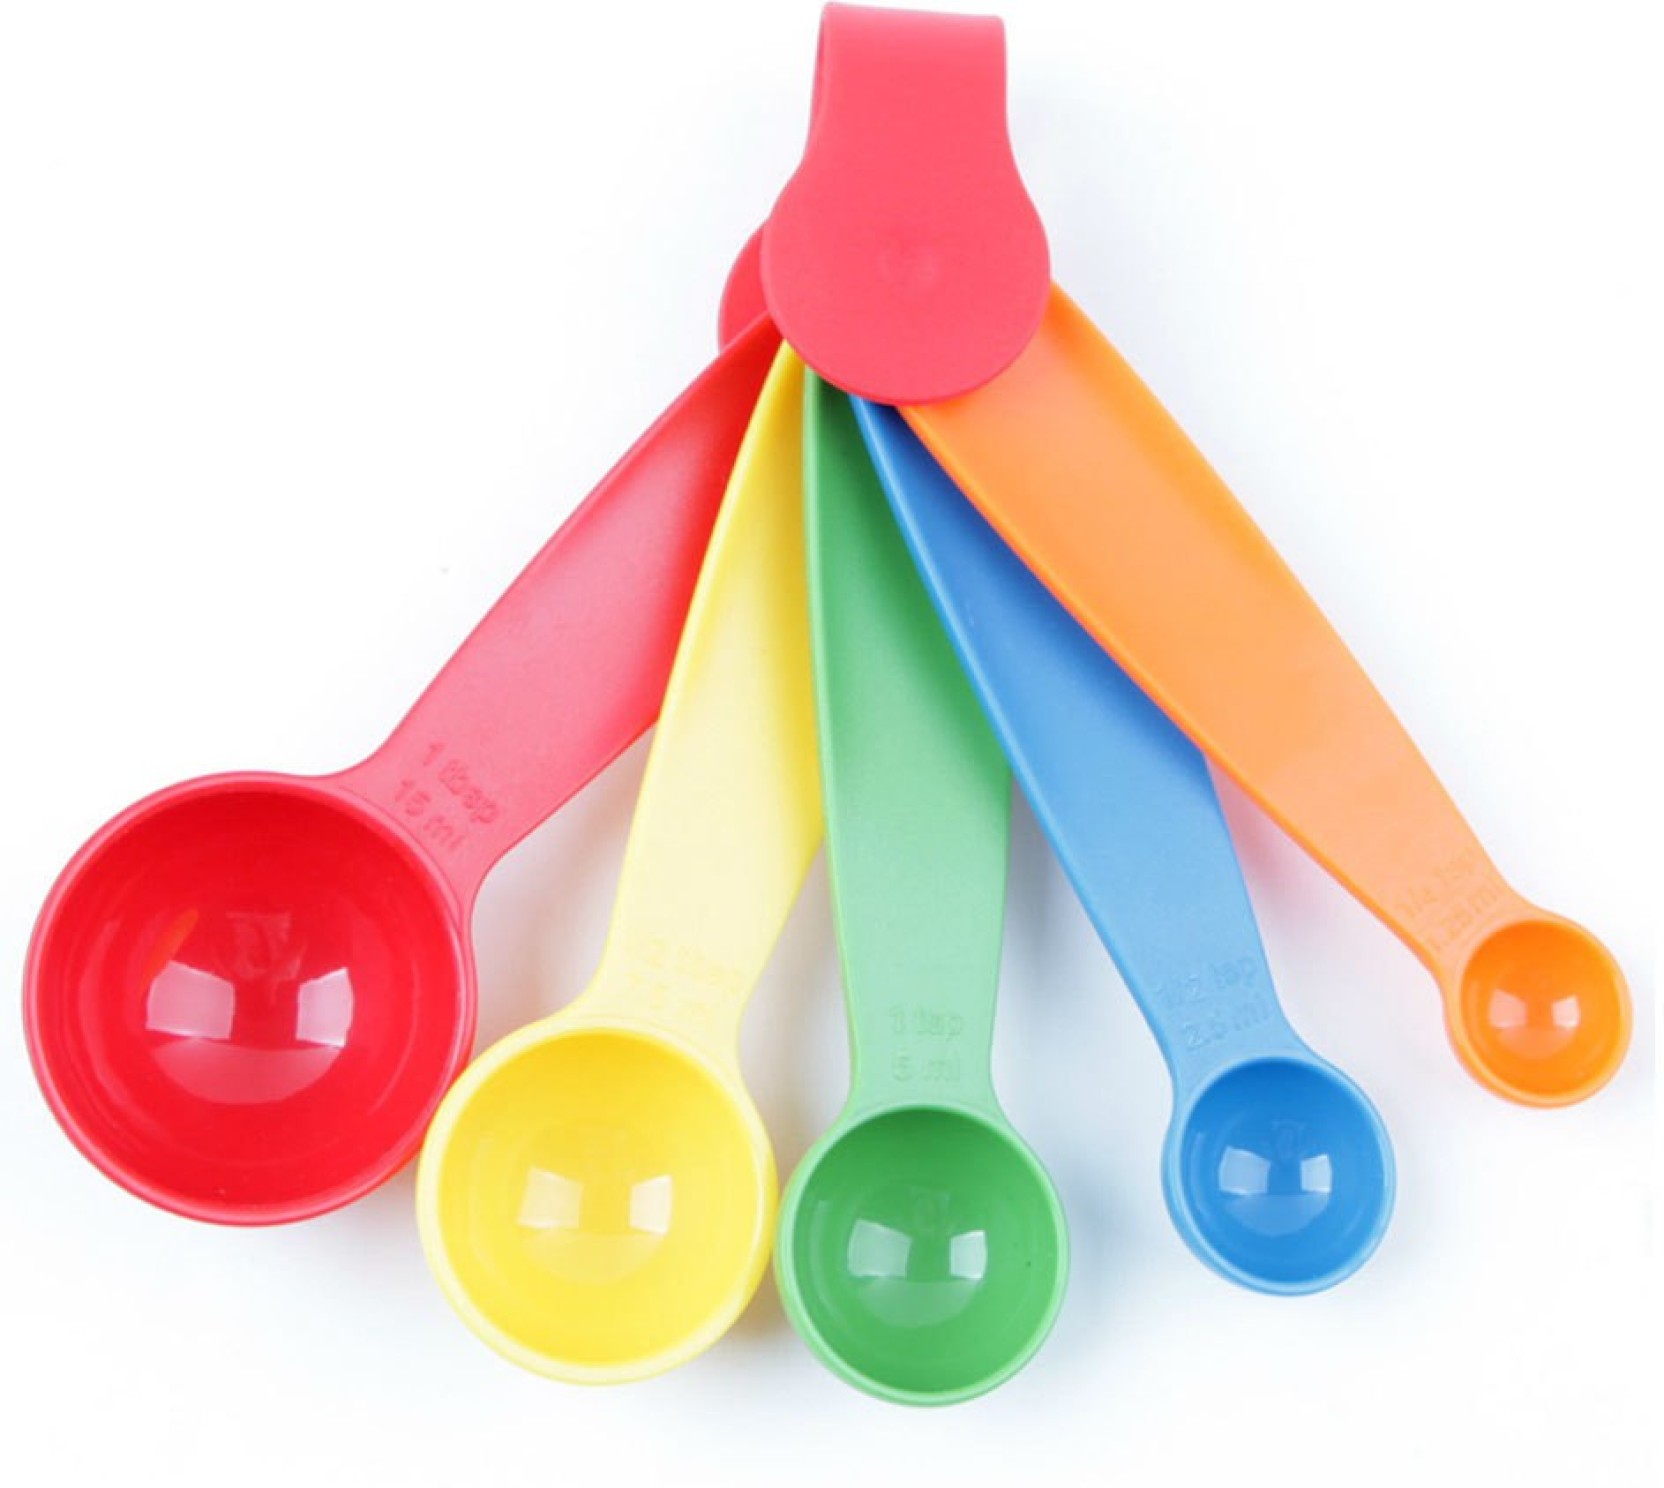 Bulfyss Plastic Measuring Spoon Set Price in India - Buy Bulfyss ...